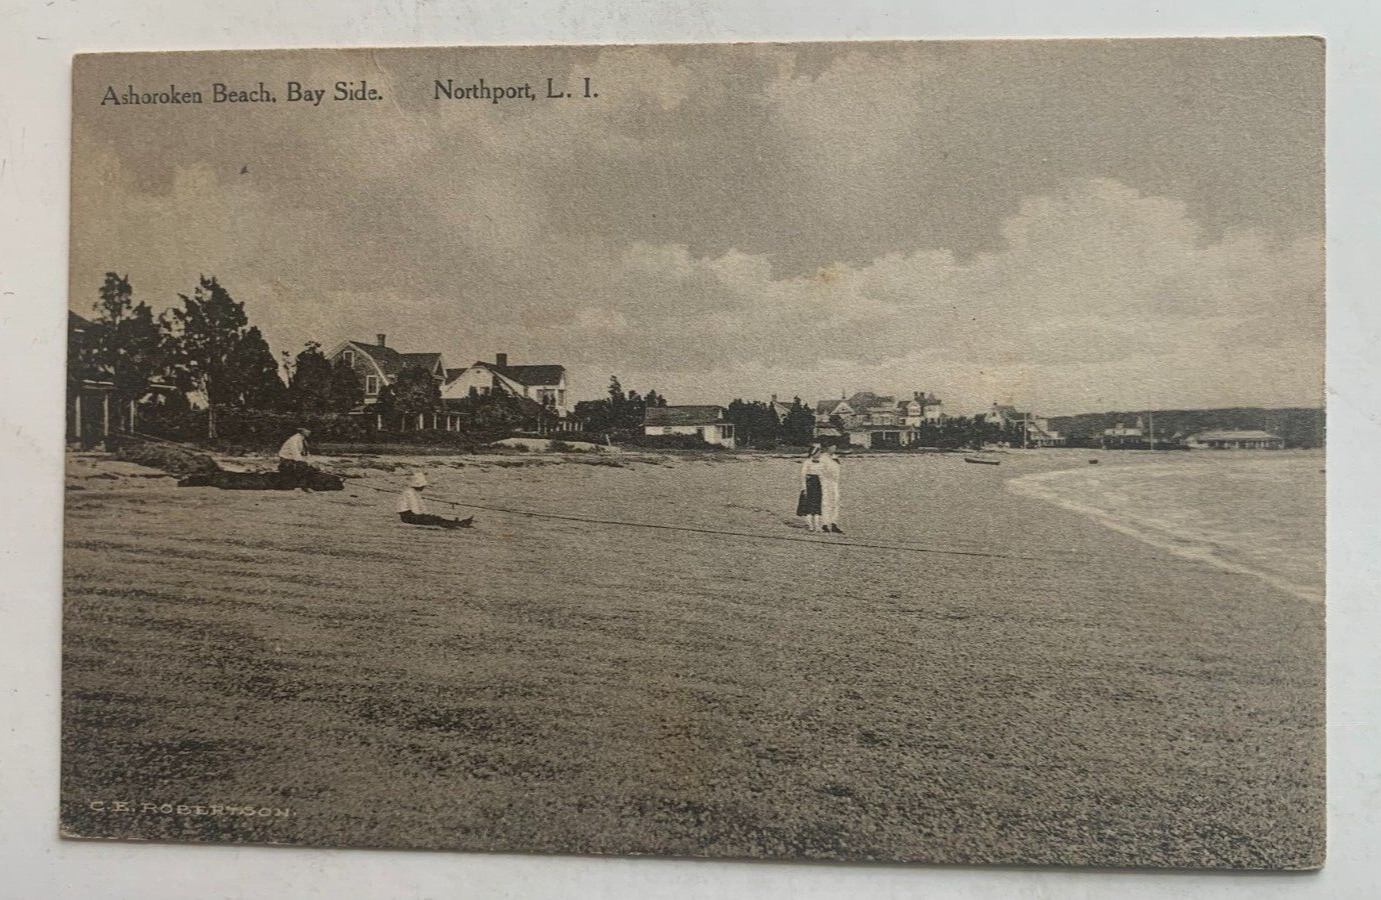 c 1910s NY Postcard Northport LI New York Asharoken Beach Bay Side people houses